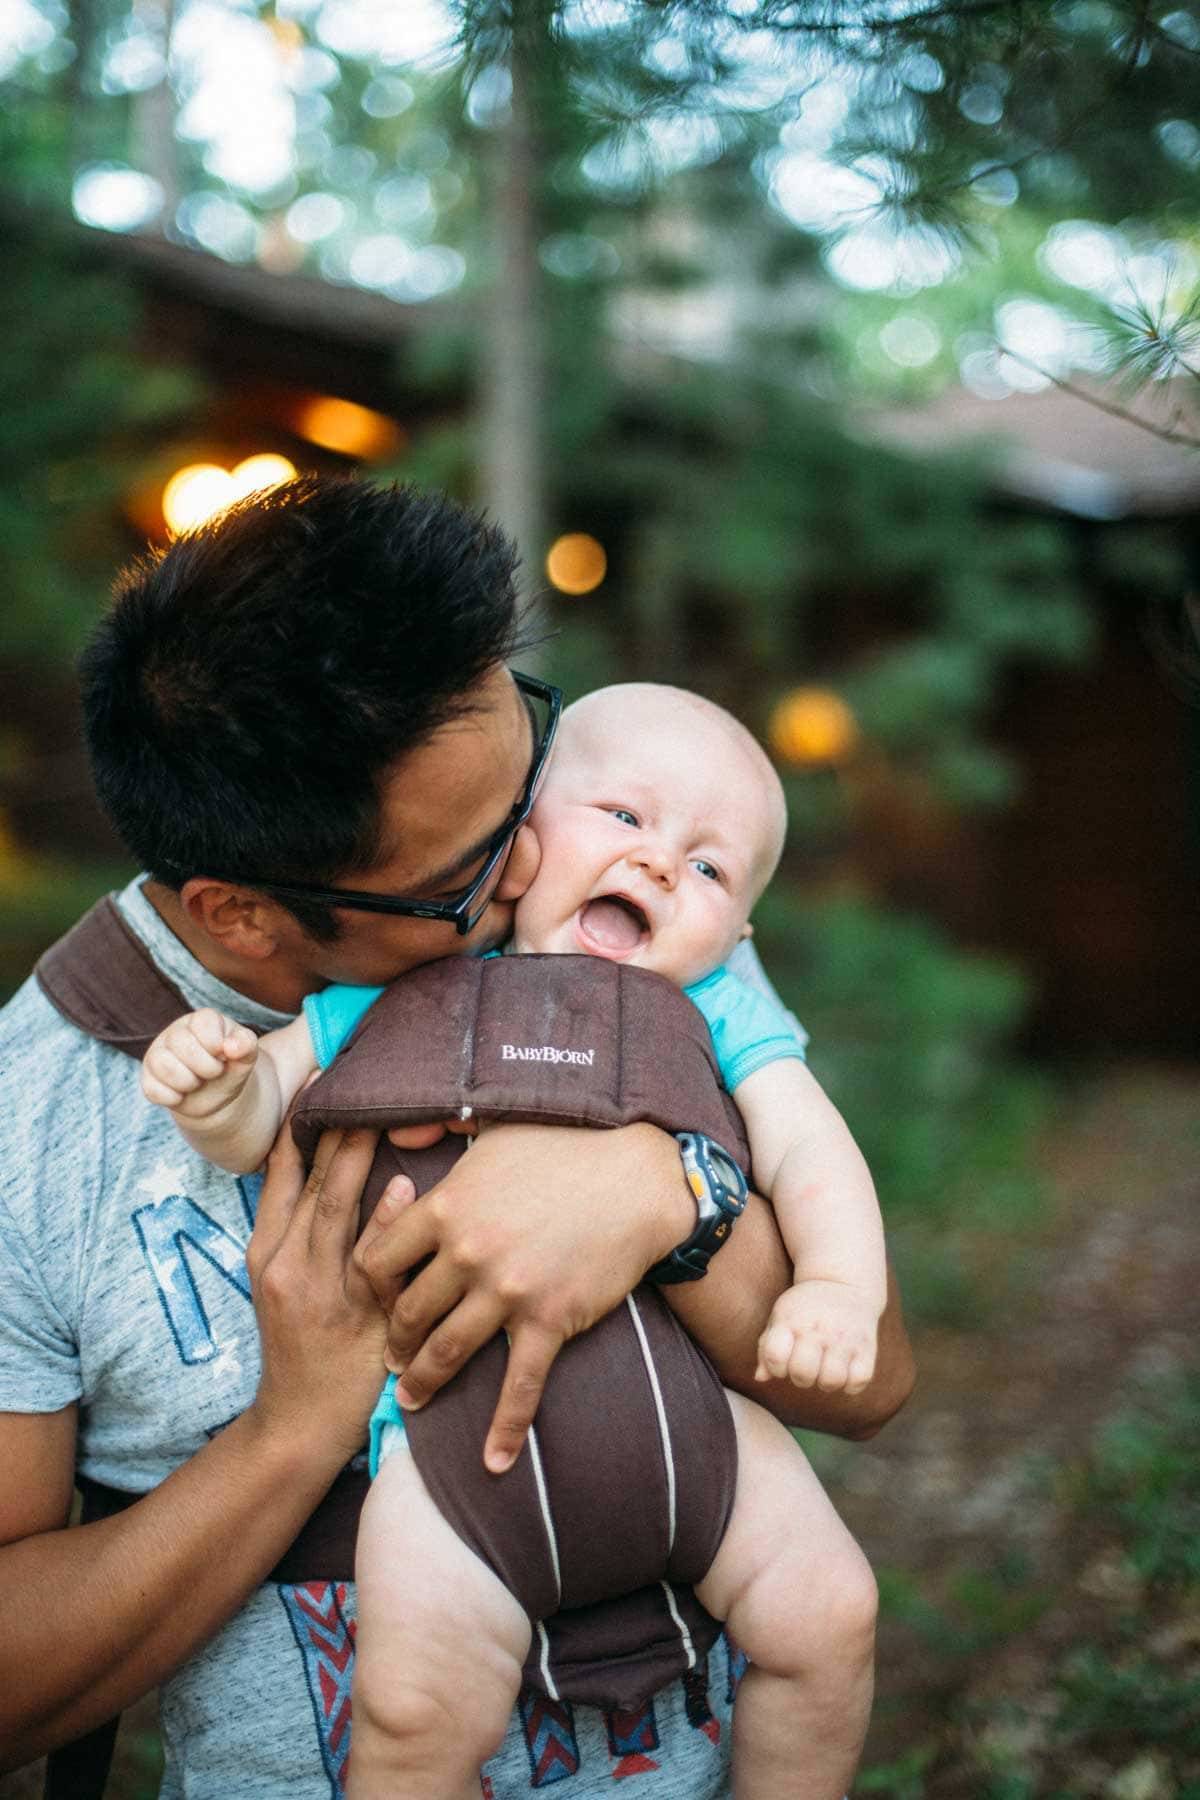 Man kissing baby on the cheek.